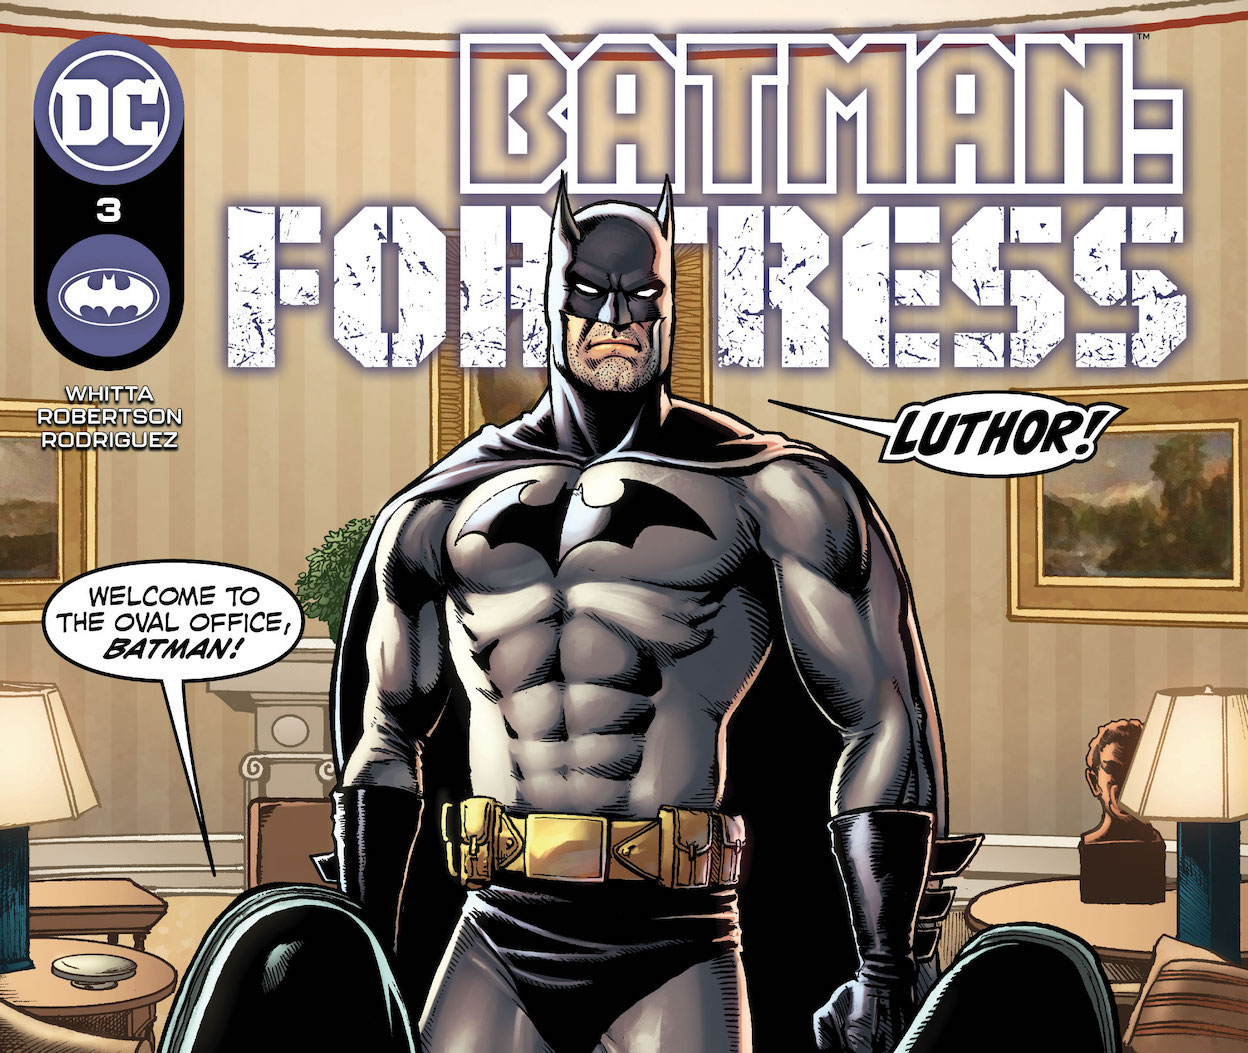 'Batman: Fortress' #3 finds a new path as Batman runs out of options